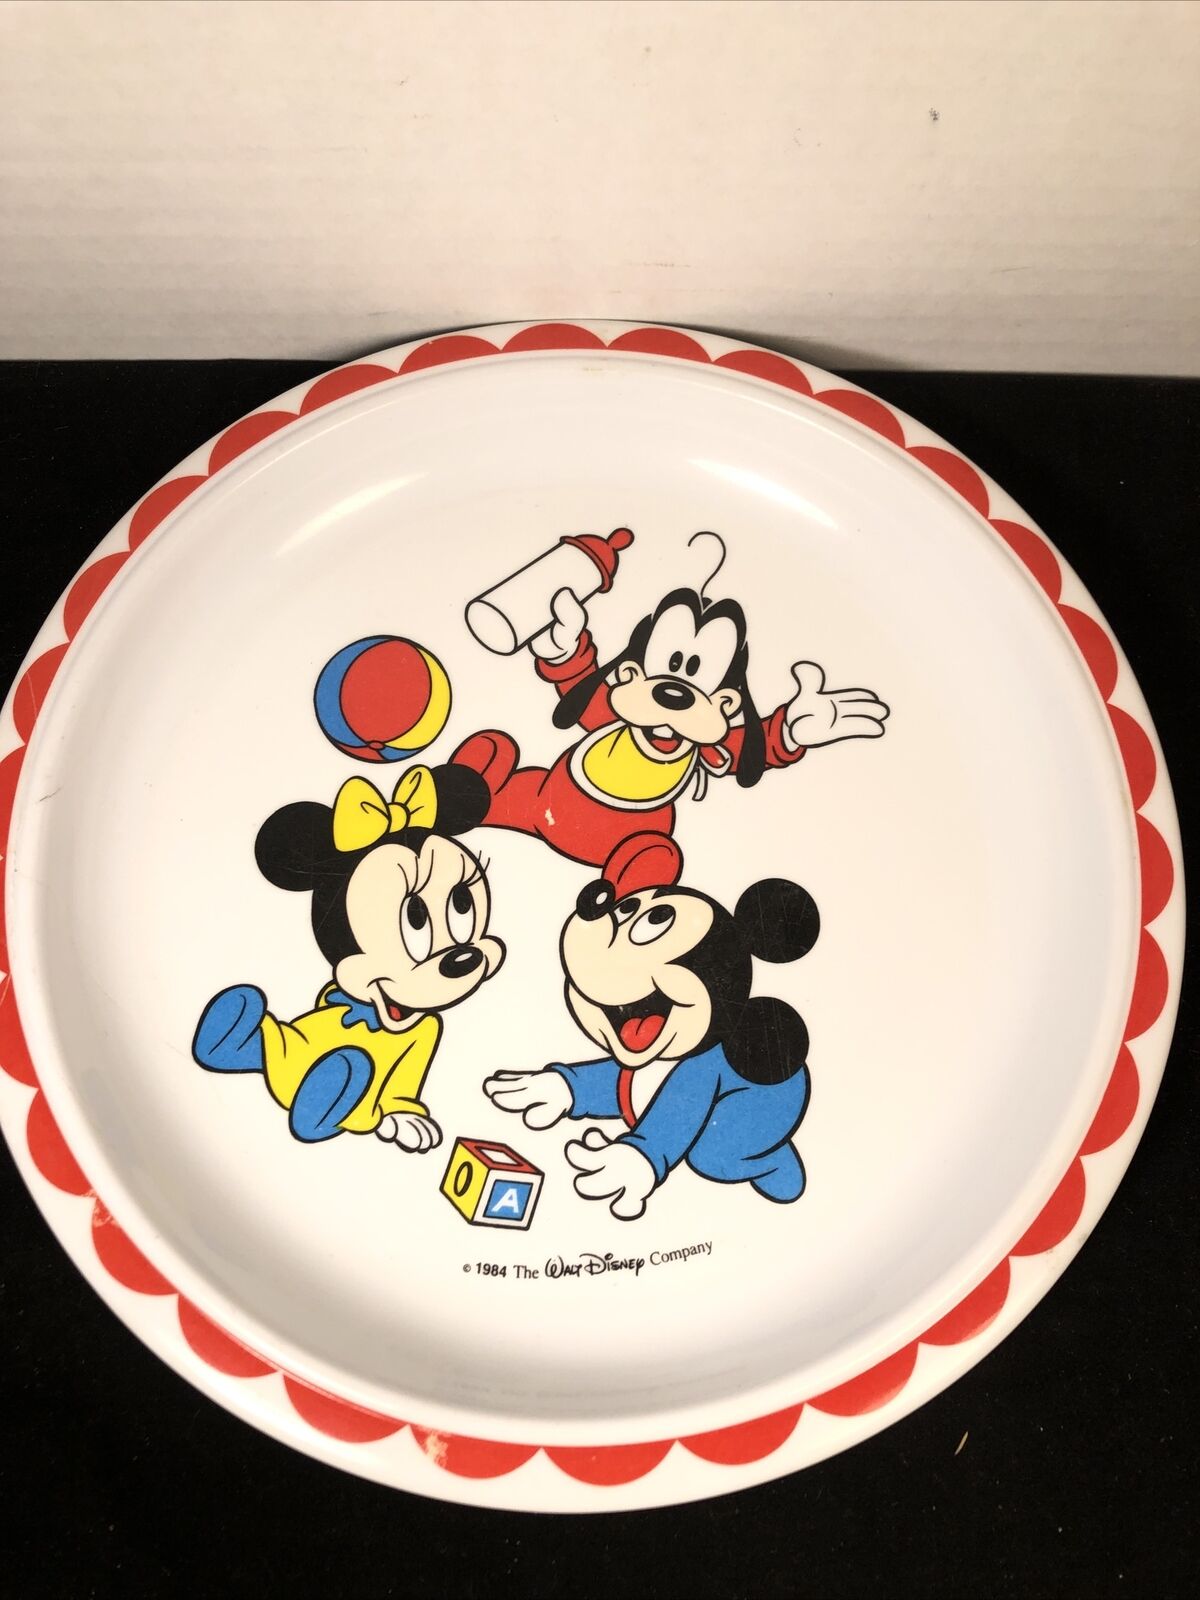 Selandia Designs Disney Baby Mickey Minnie Mouse Pluto plate 1984